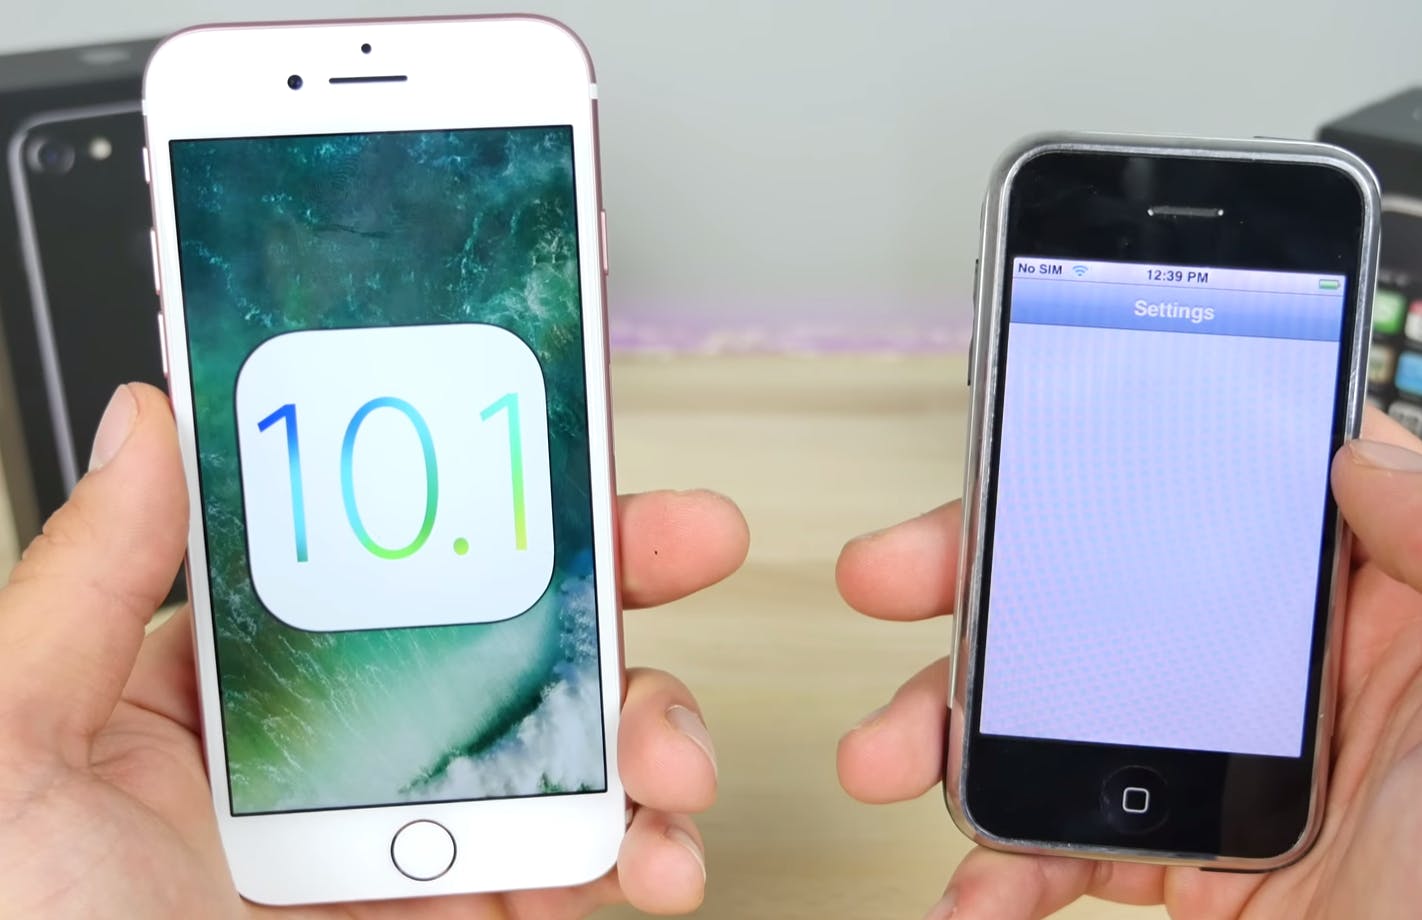 apple smartphone comparison: iPhone 7 vs iPhone 2G: